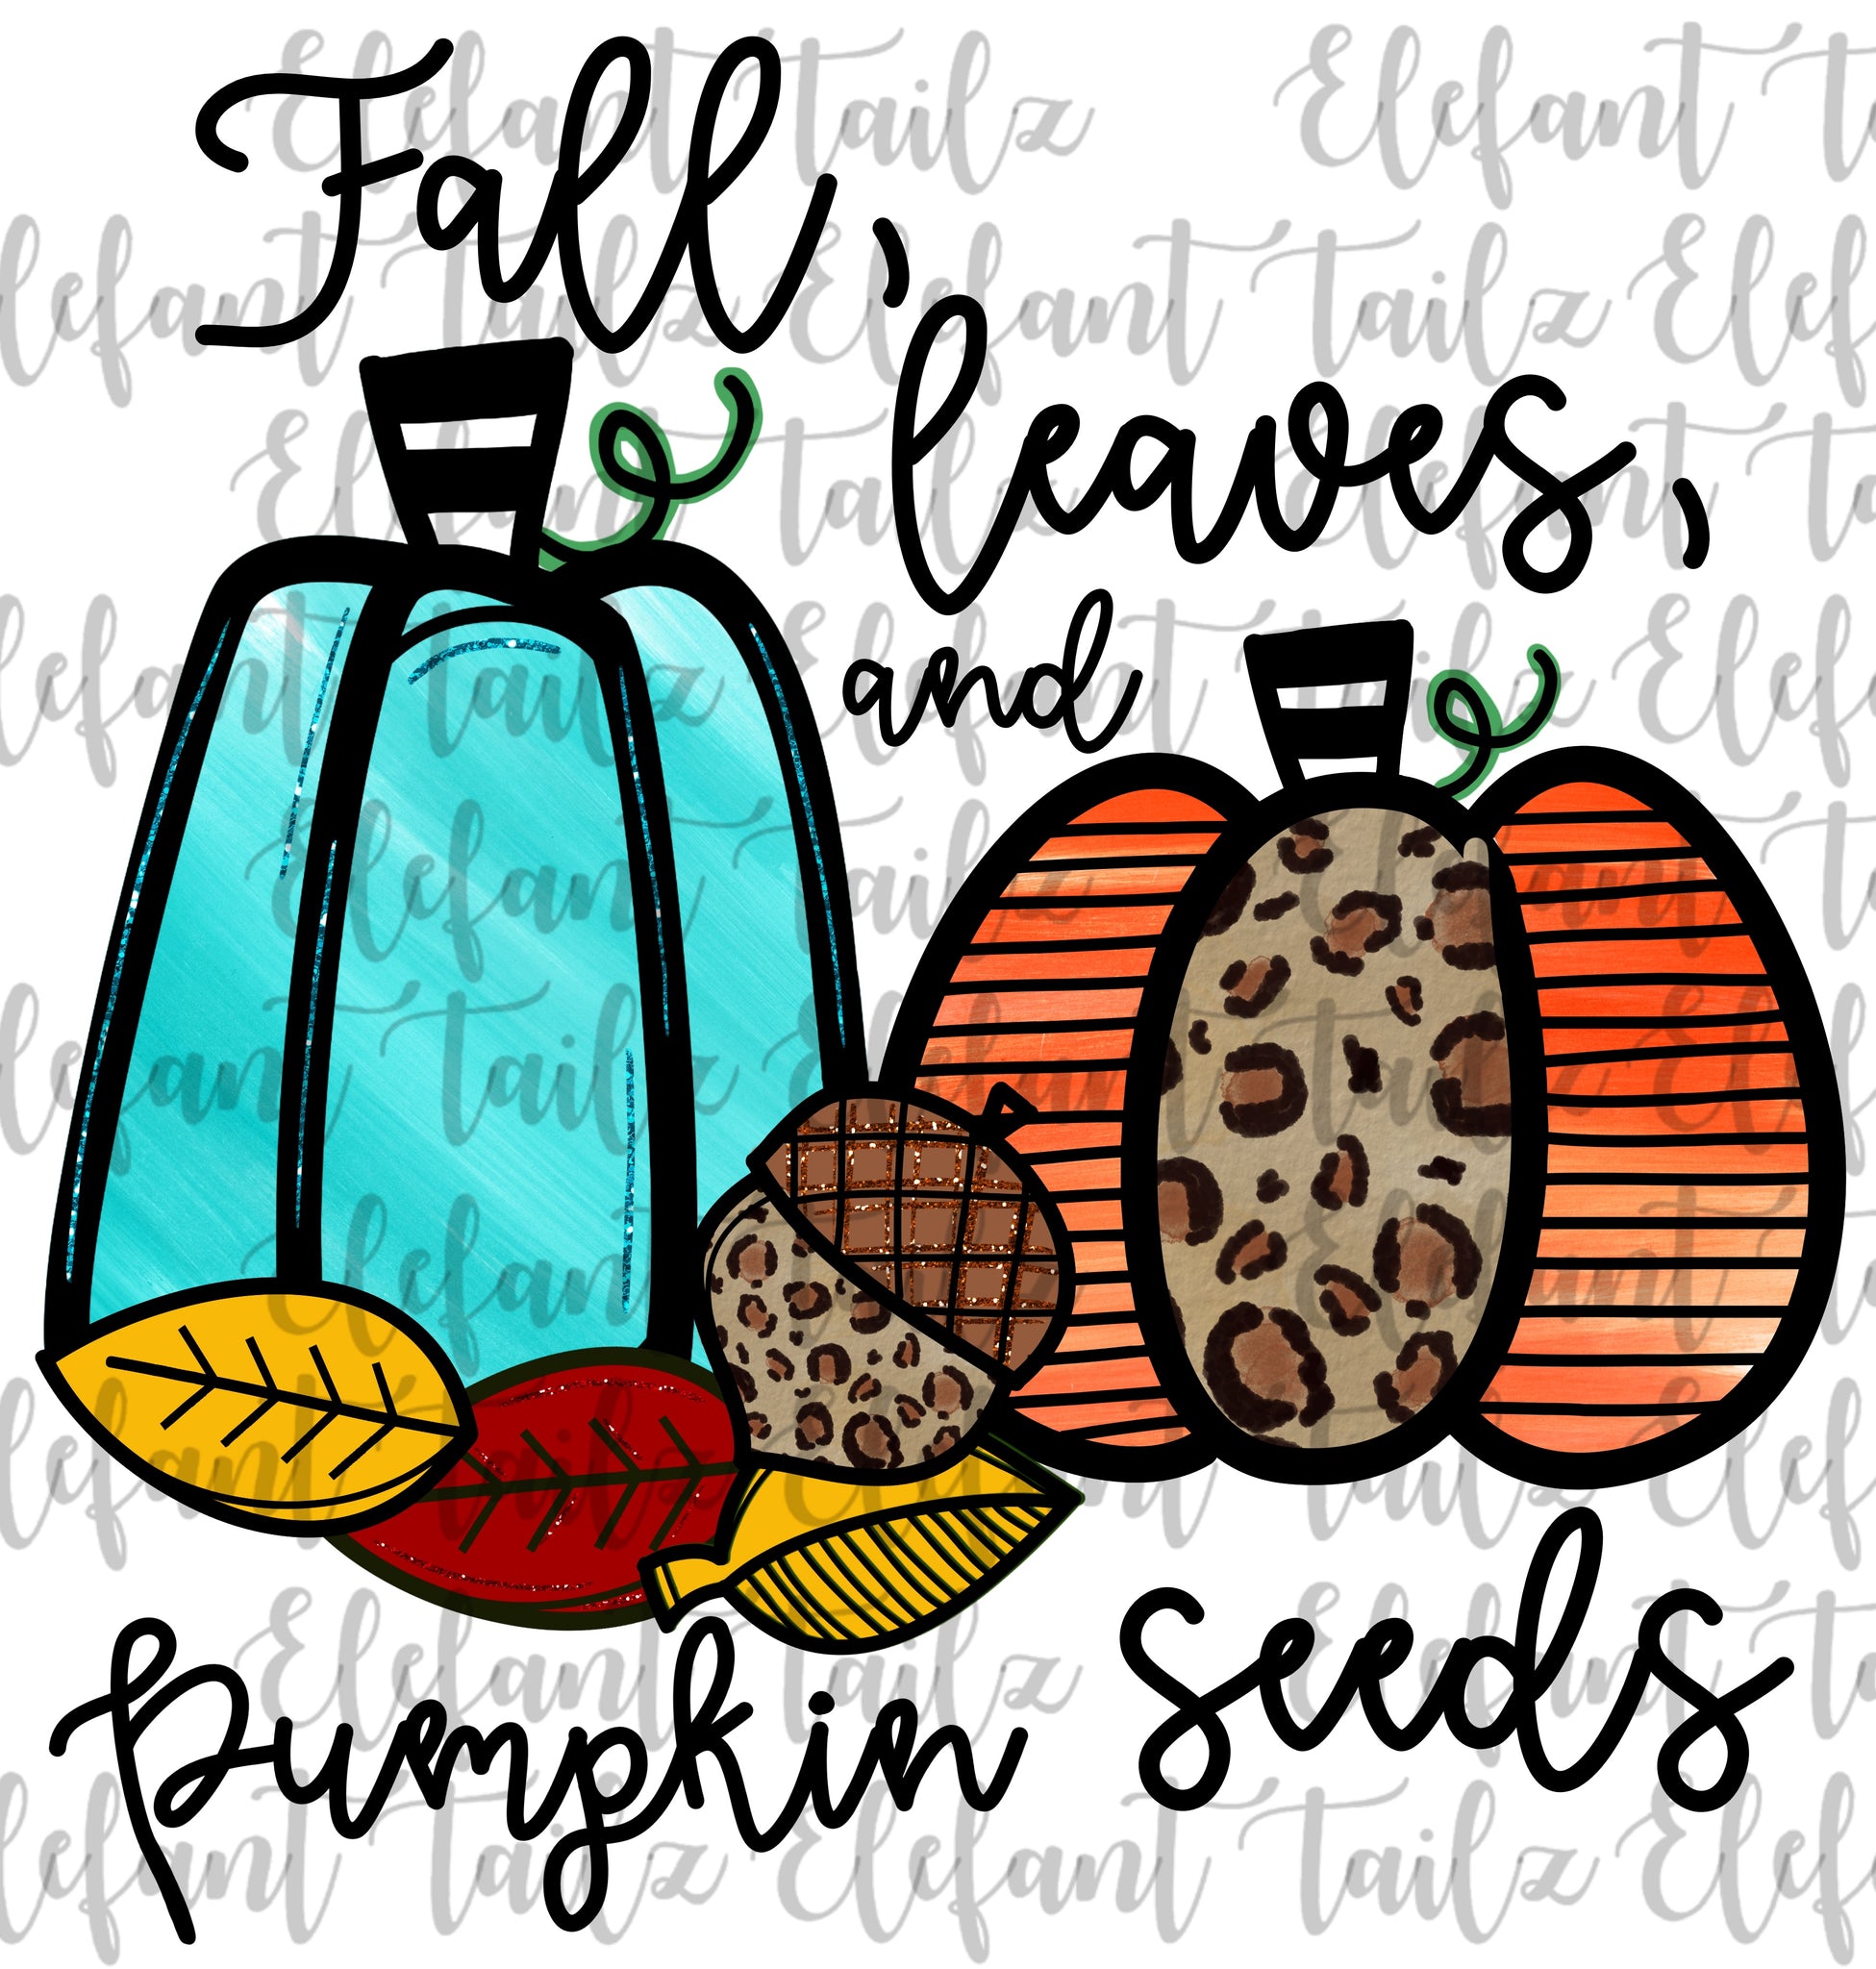 Fall, Leaves, & Pumpkin Seeds